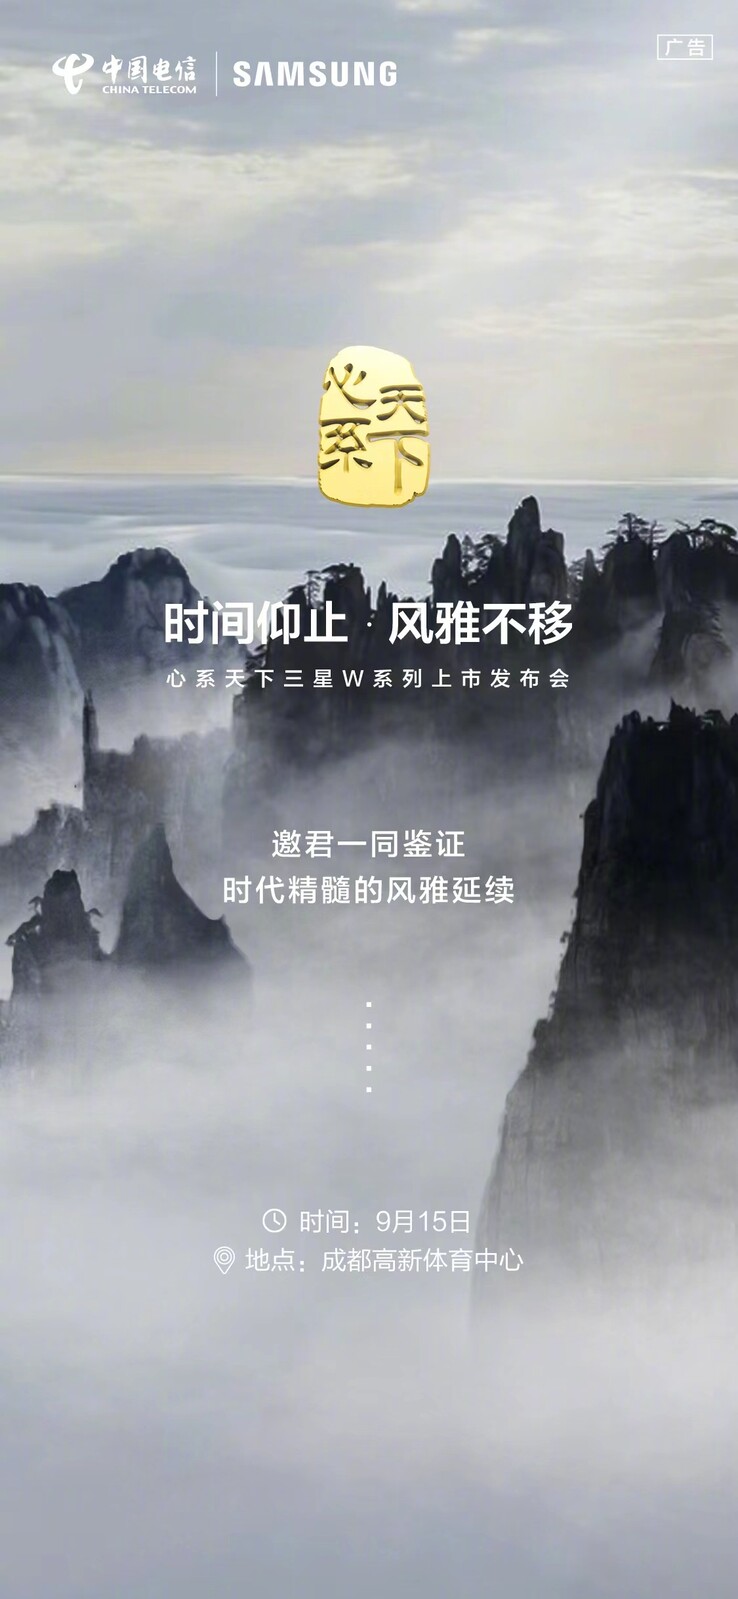 The Samsung W24's poster. (Samsung CN via Weibo)